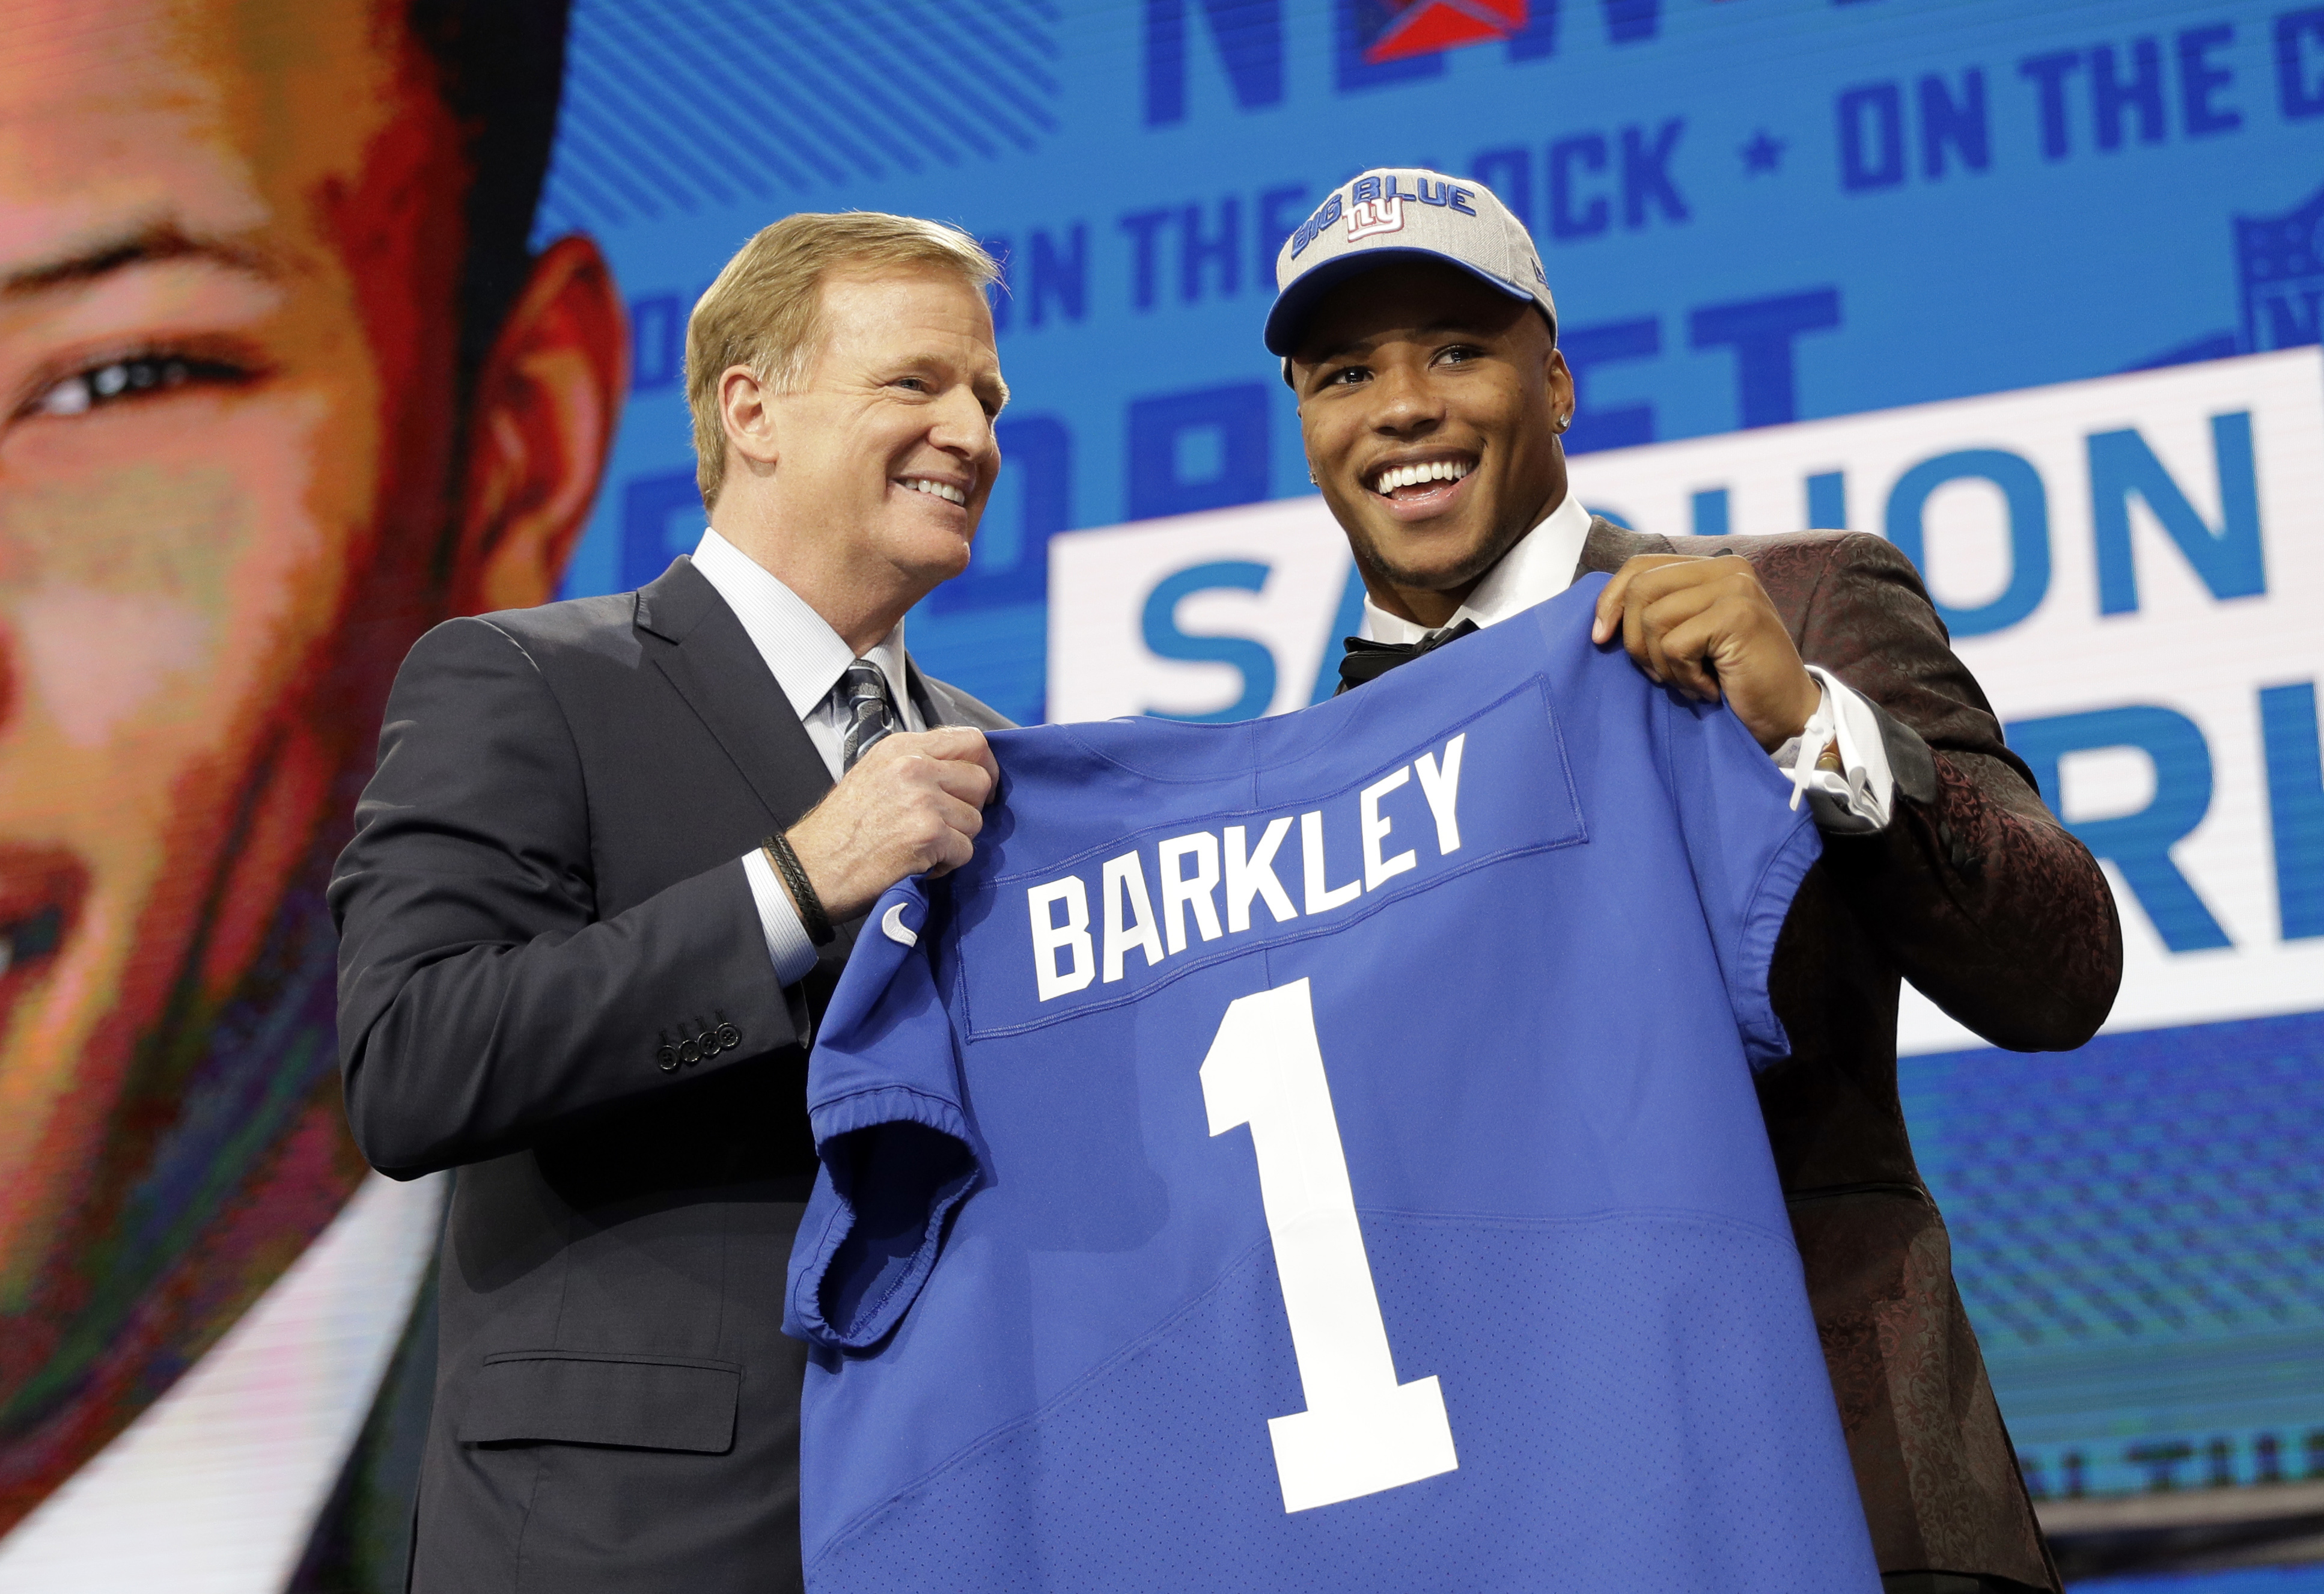 New York Giants' Saquon Barkley Has Best-Selling Draft Day Jersey